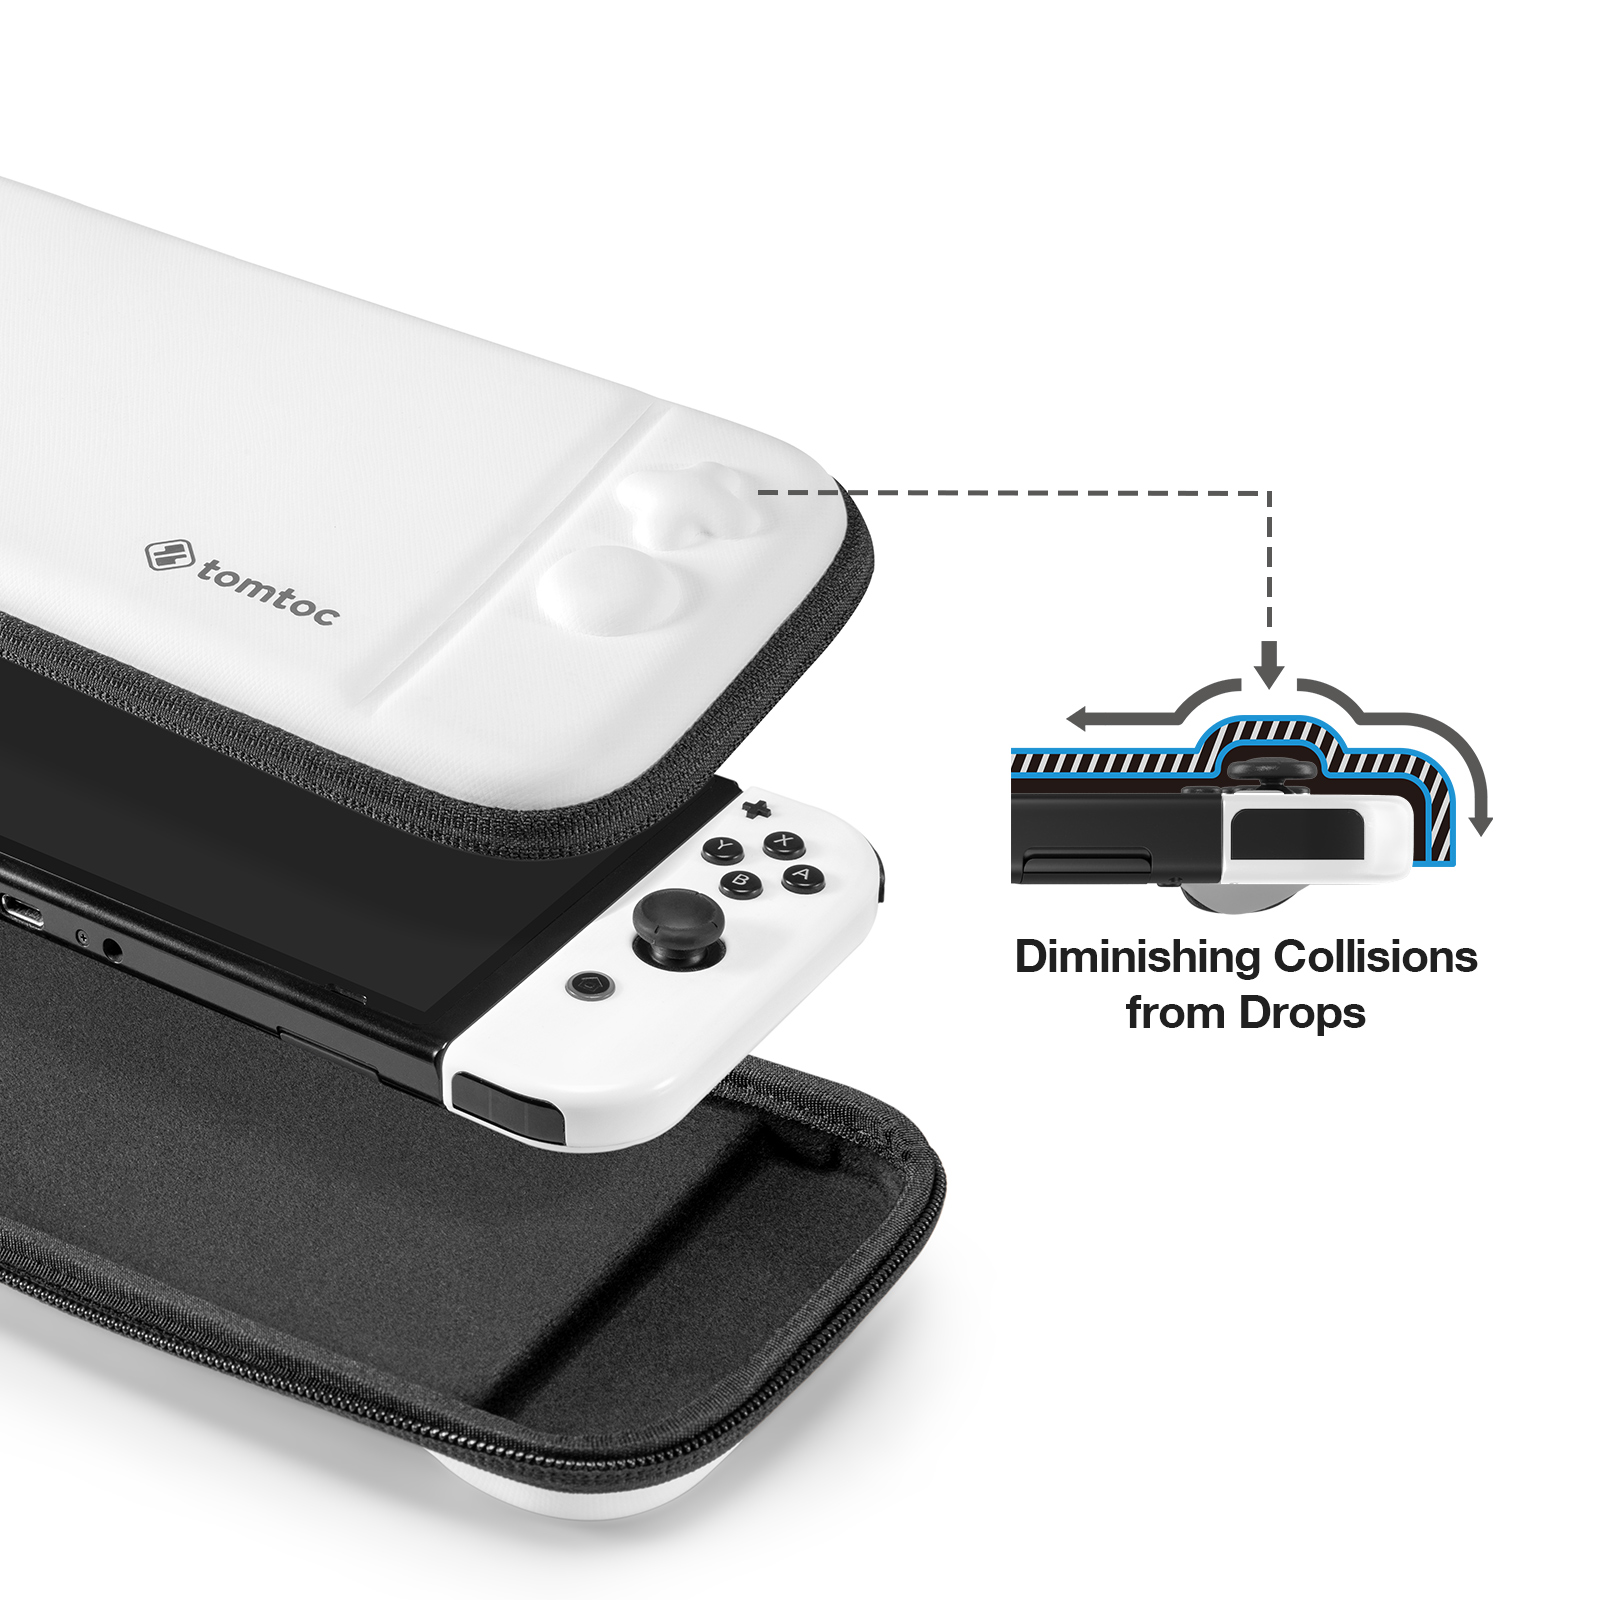 Protector para Nintendo Switch OLED - ¡Protege tu consola con estilo!